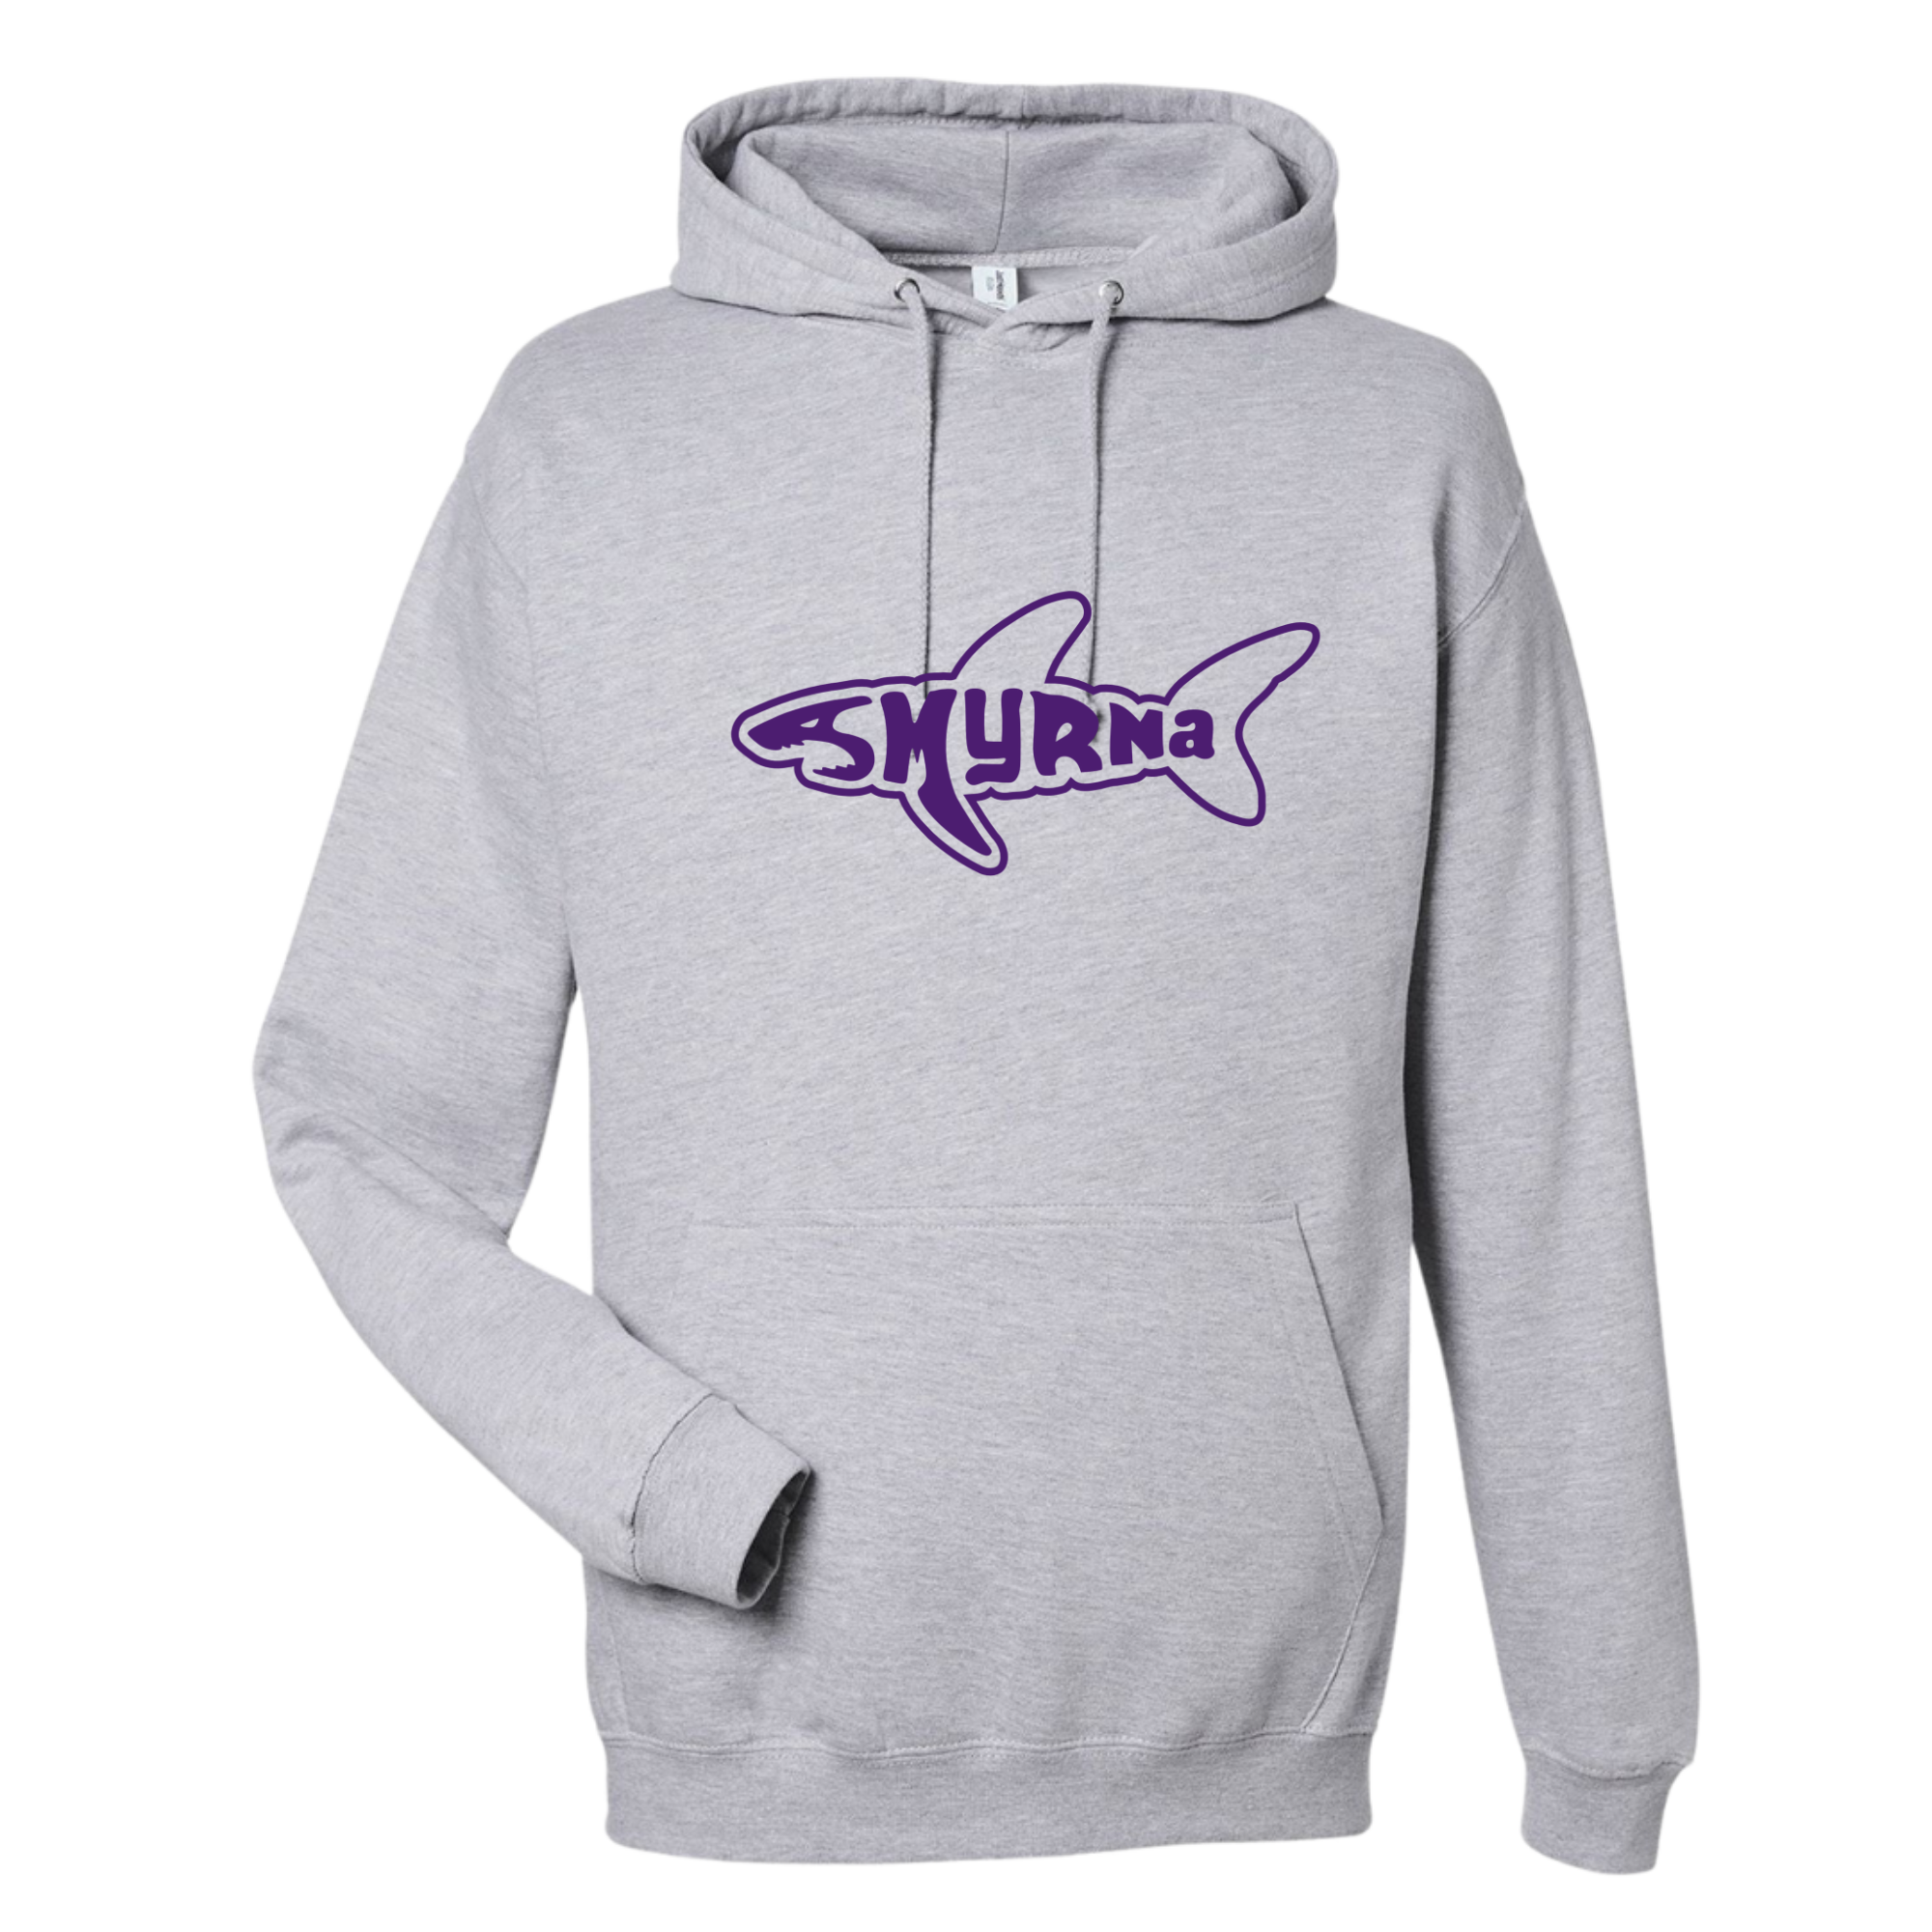 Medium Weight Unisex Hooded Sweatshirt (Customized) - Smyrna Sharks